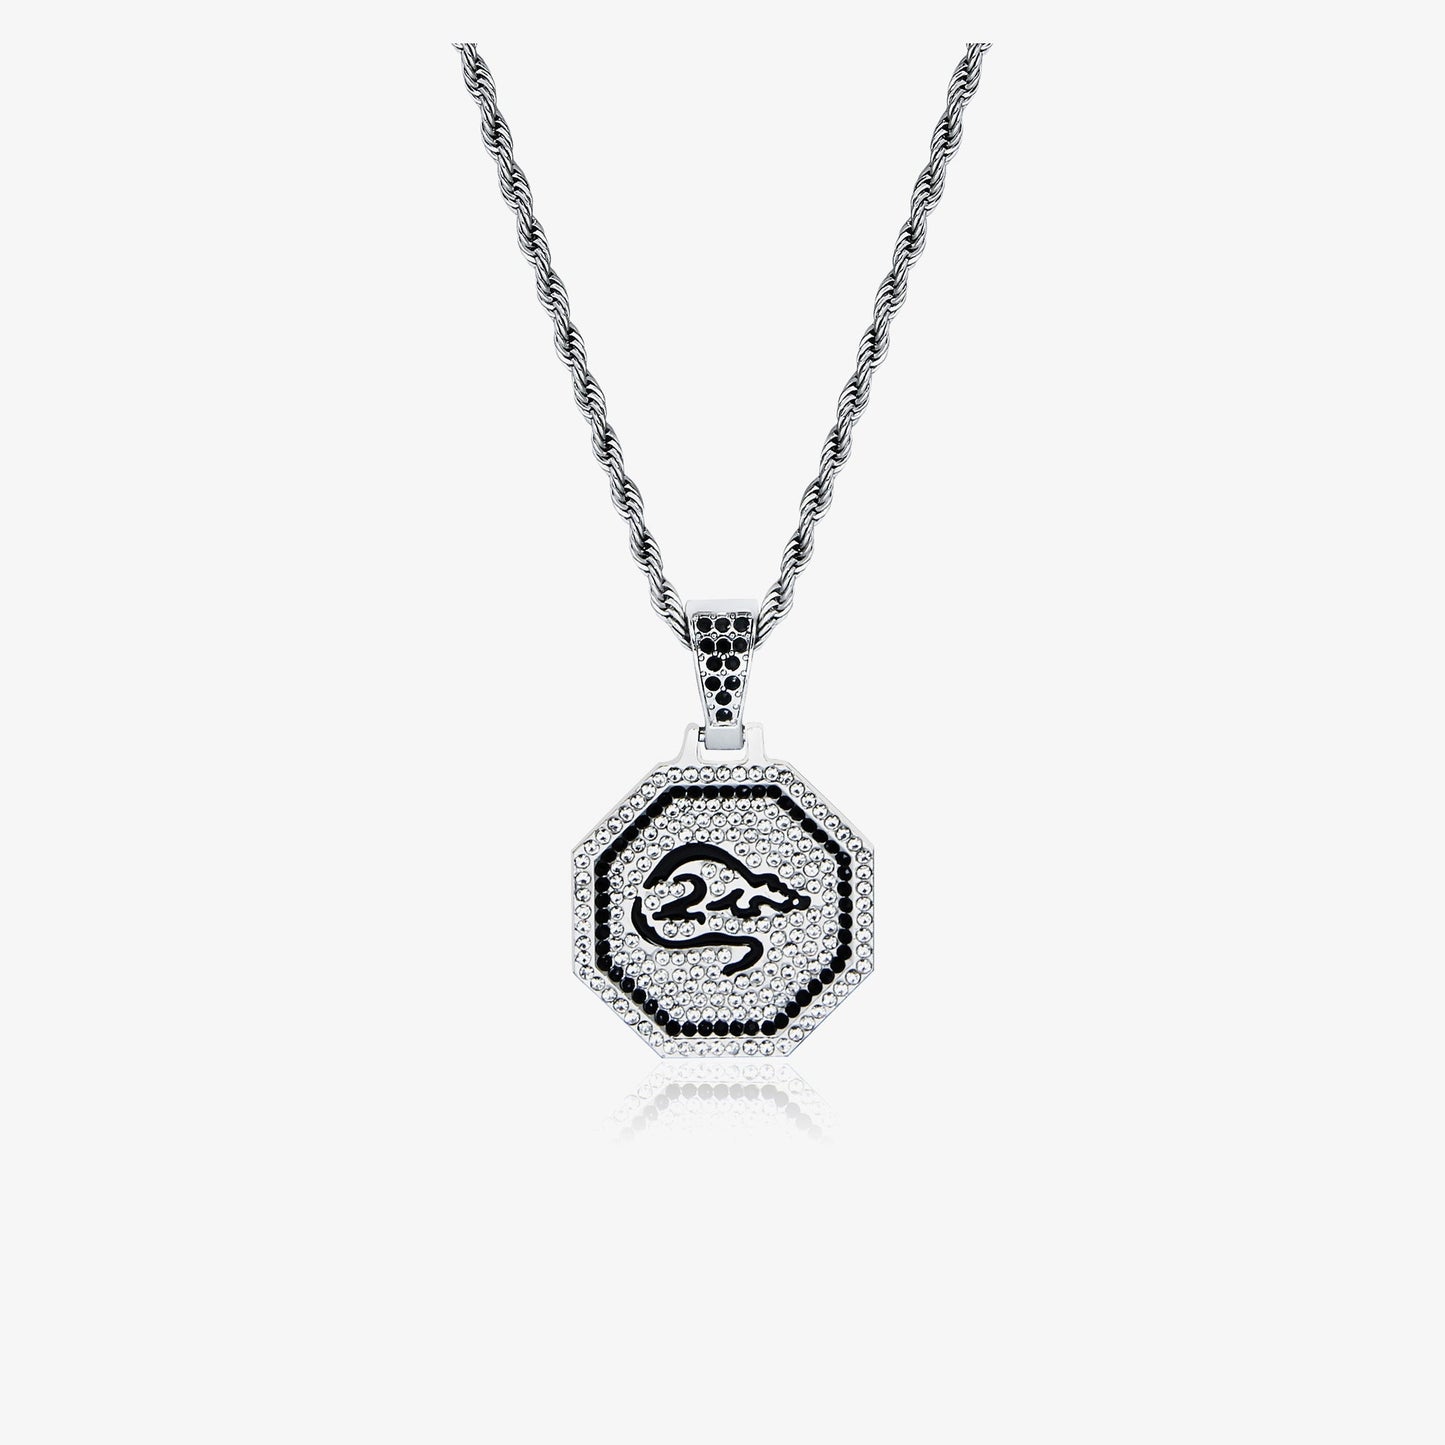 Twelve Zodiac Zodiac Men Fashionable Necklaces - NextthinkShop0CJLX174931102BY0